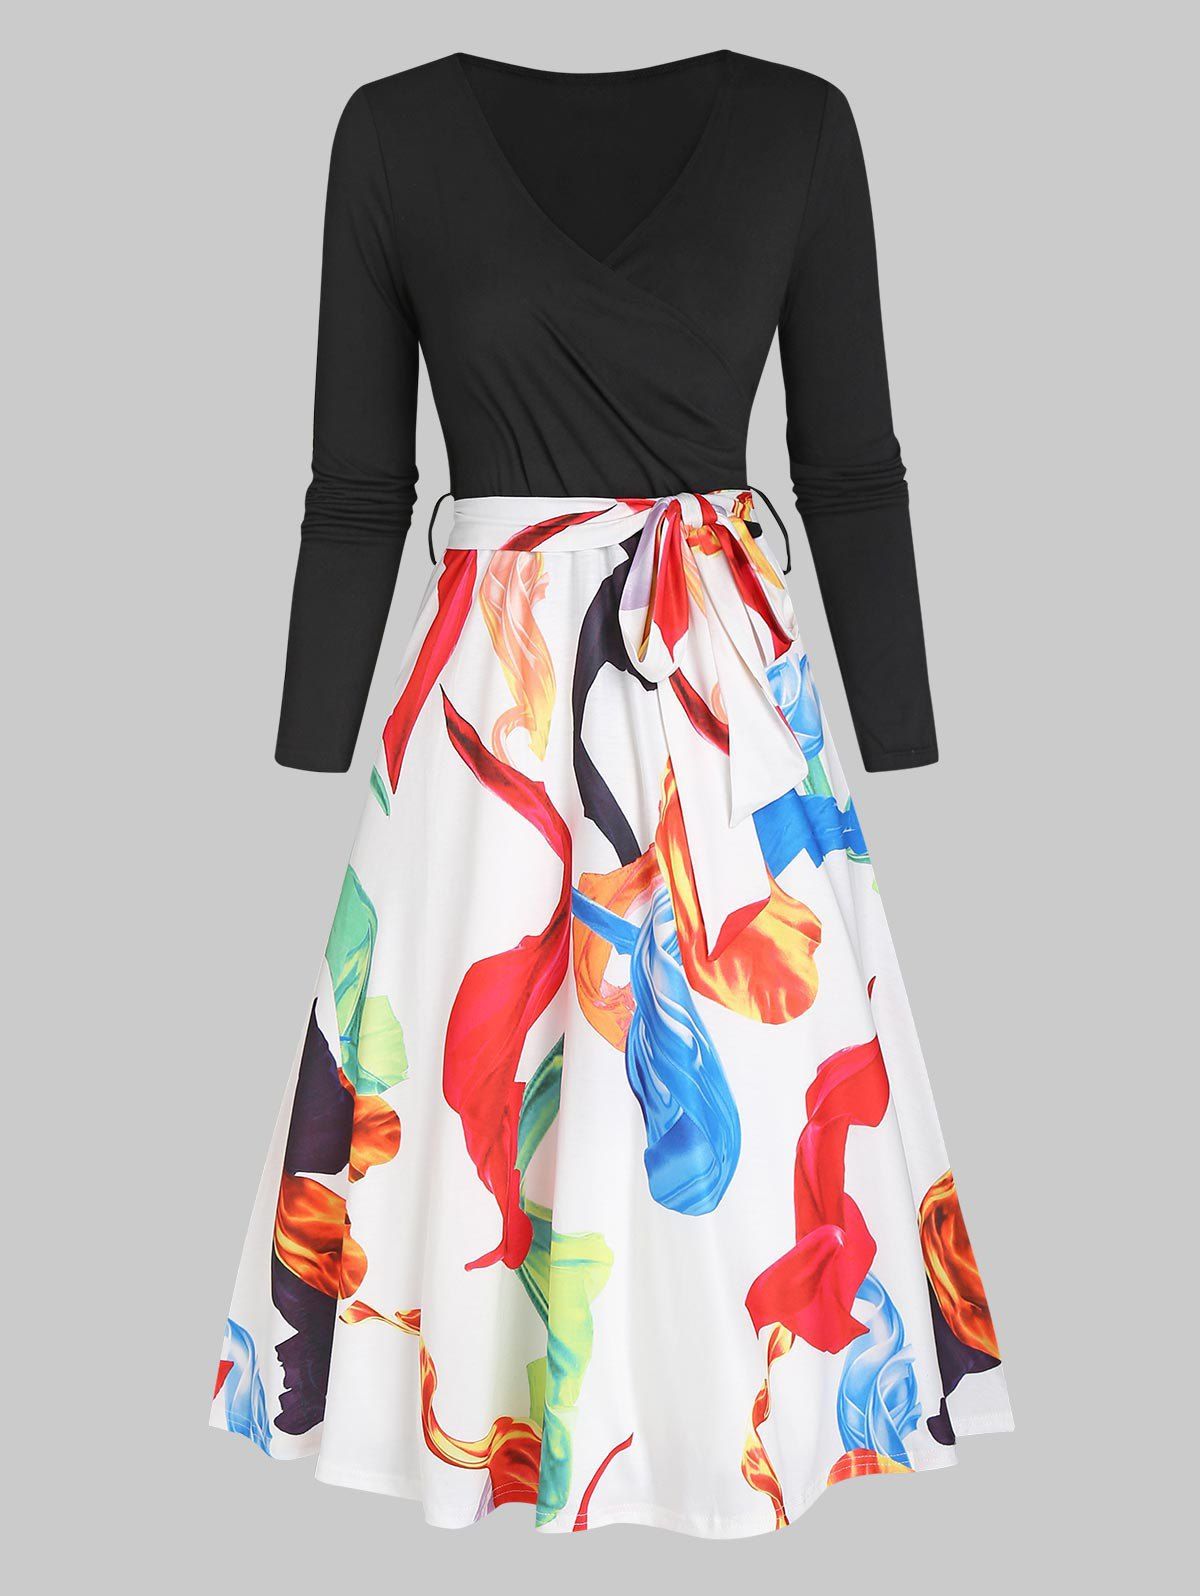 Surplice Colorful Print Belted Long Sleeve Dress - BLACK L